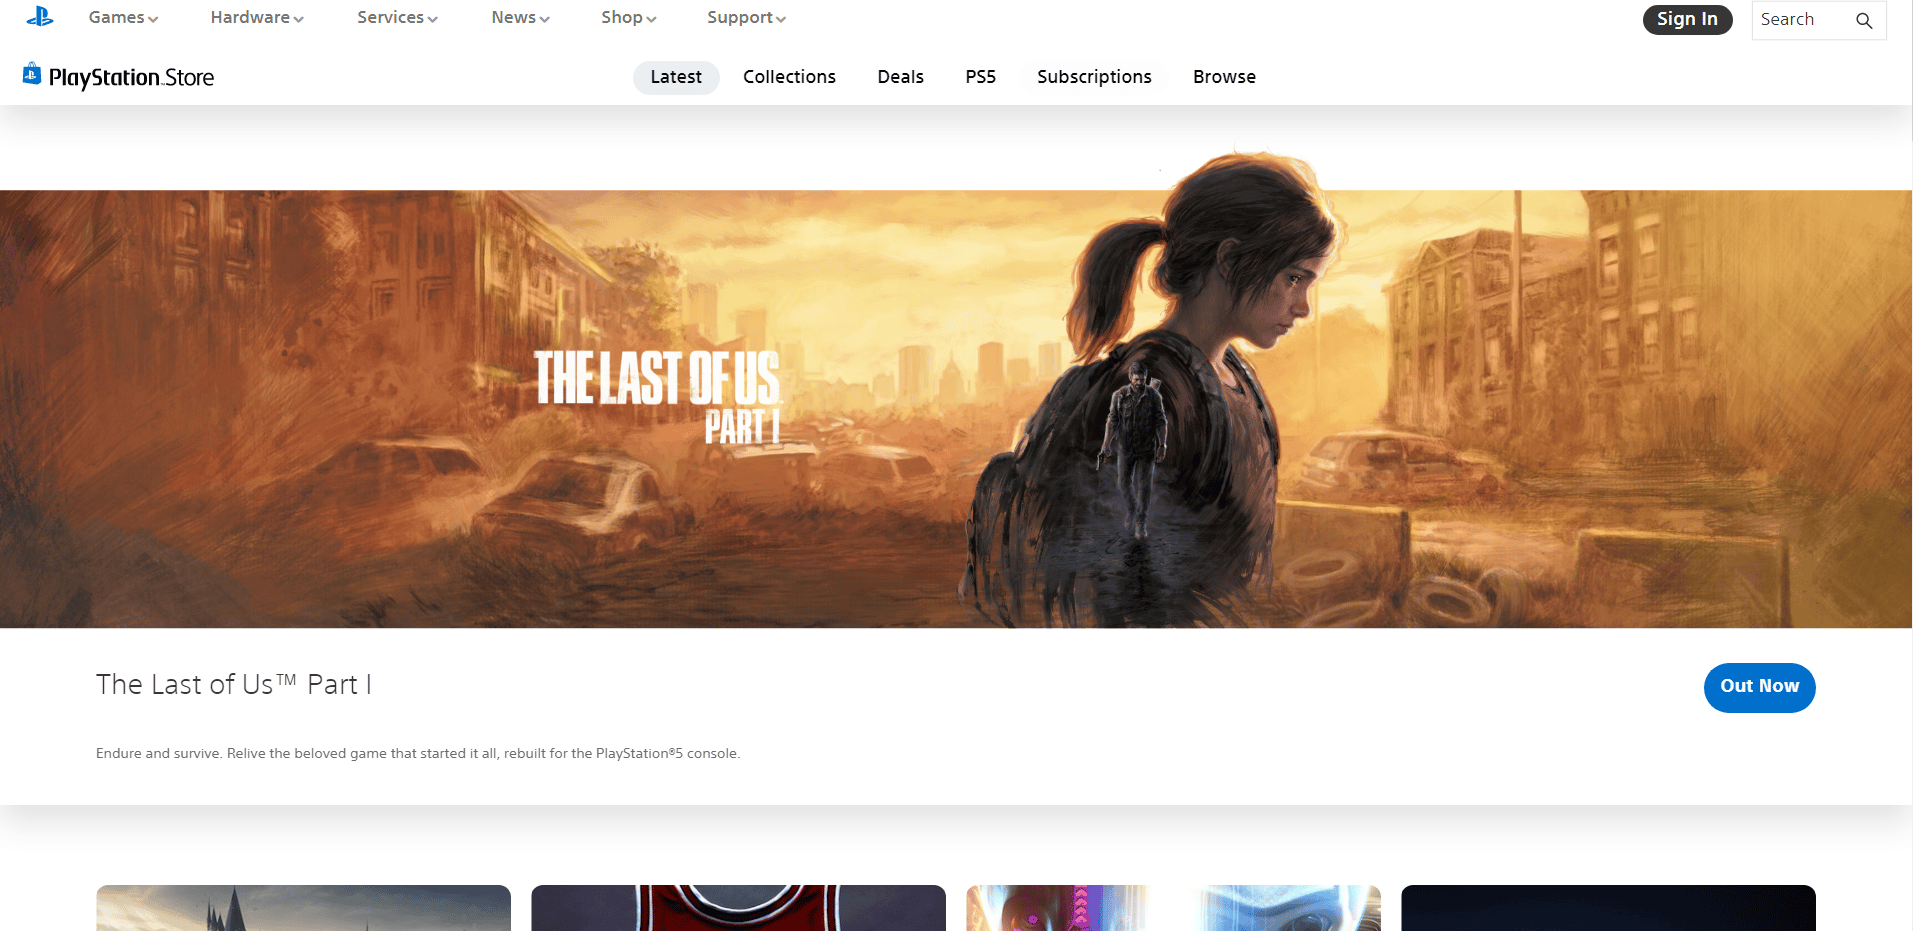 PlayStation Store website.